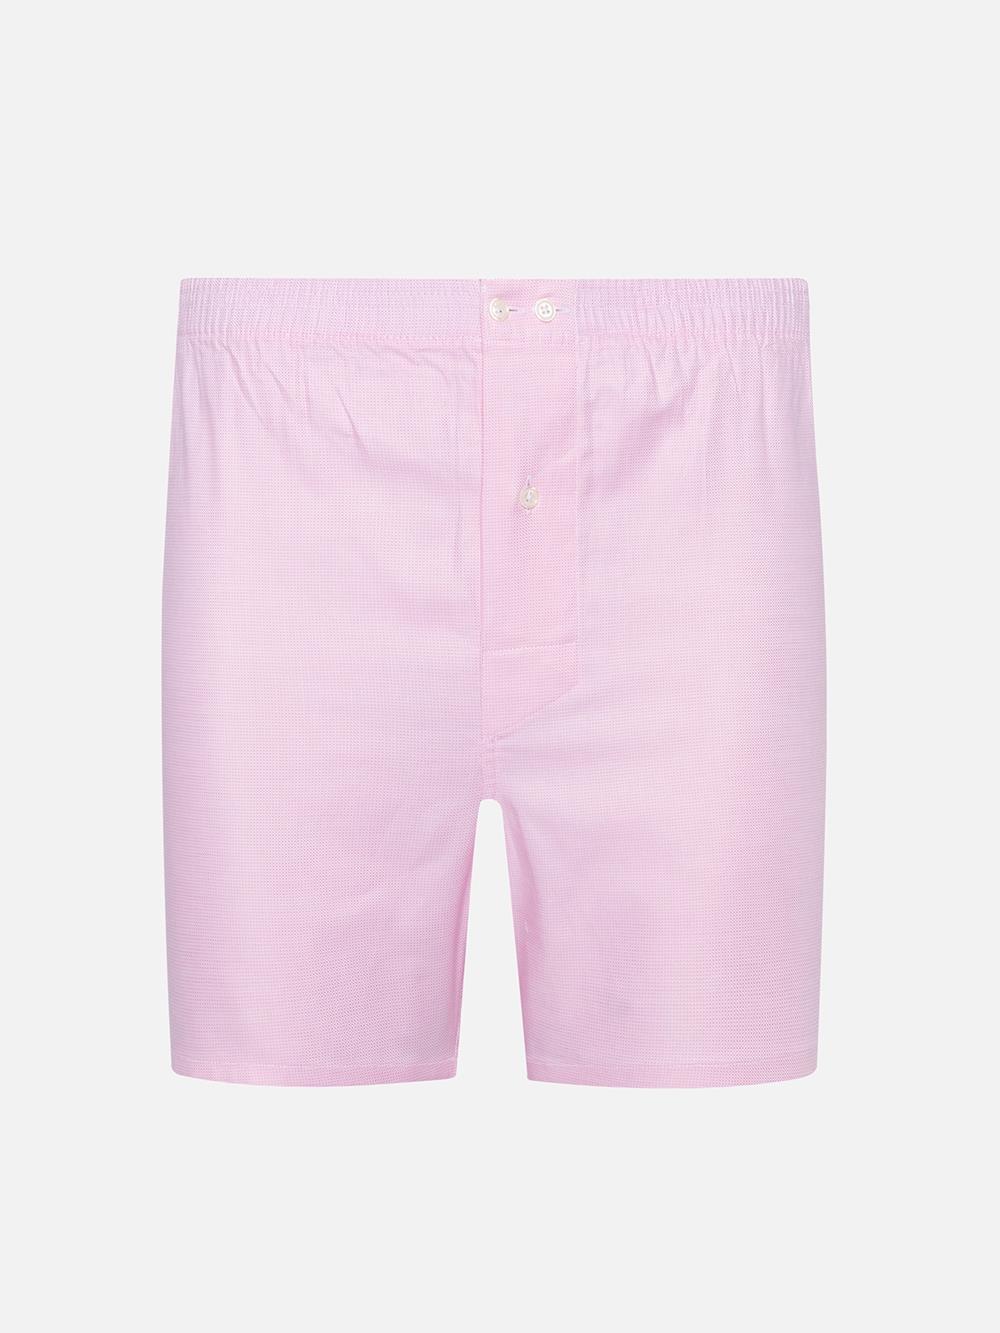 Boxer shorts in pink basket weave